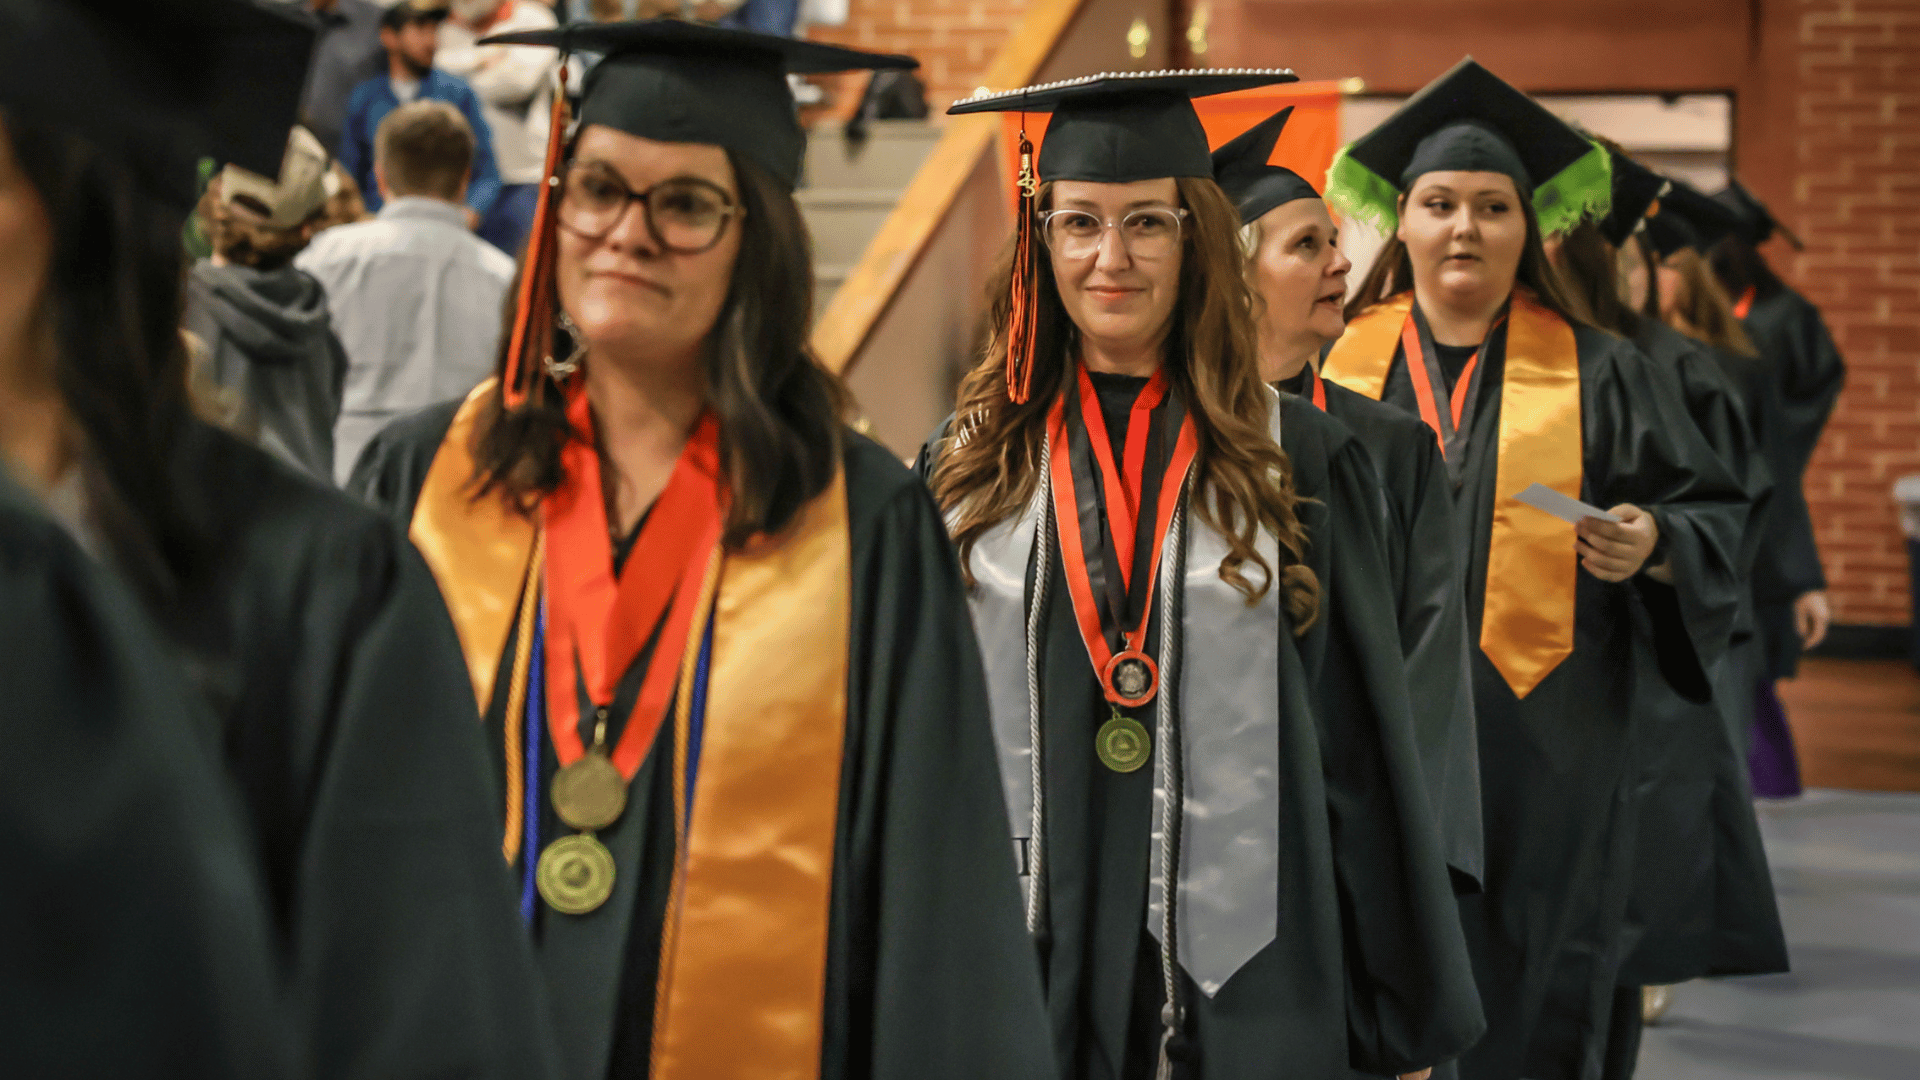 OSU Institute of Technology Celebrates 226th Graduation: Hundreds of Graduates Ready to Impact the Workforce